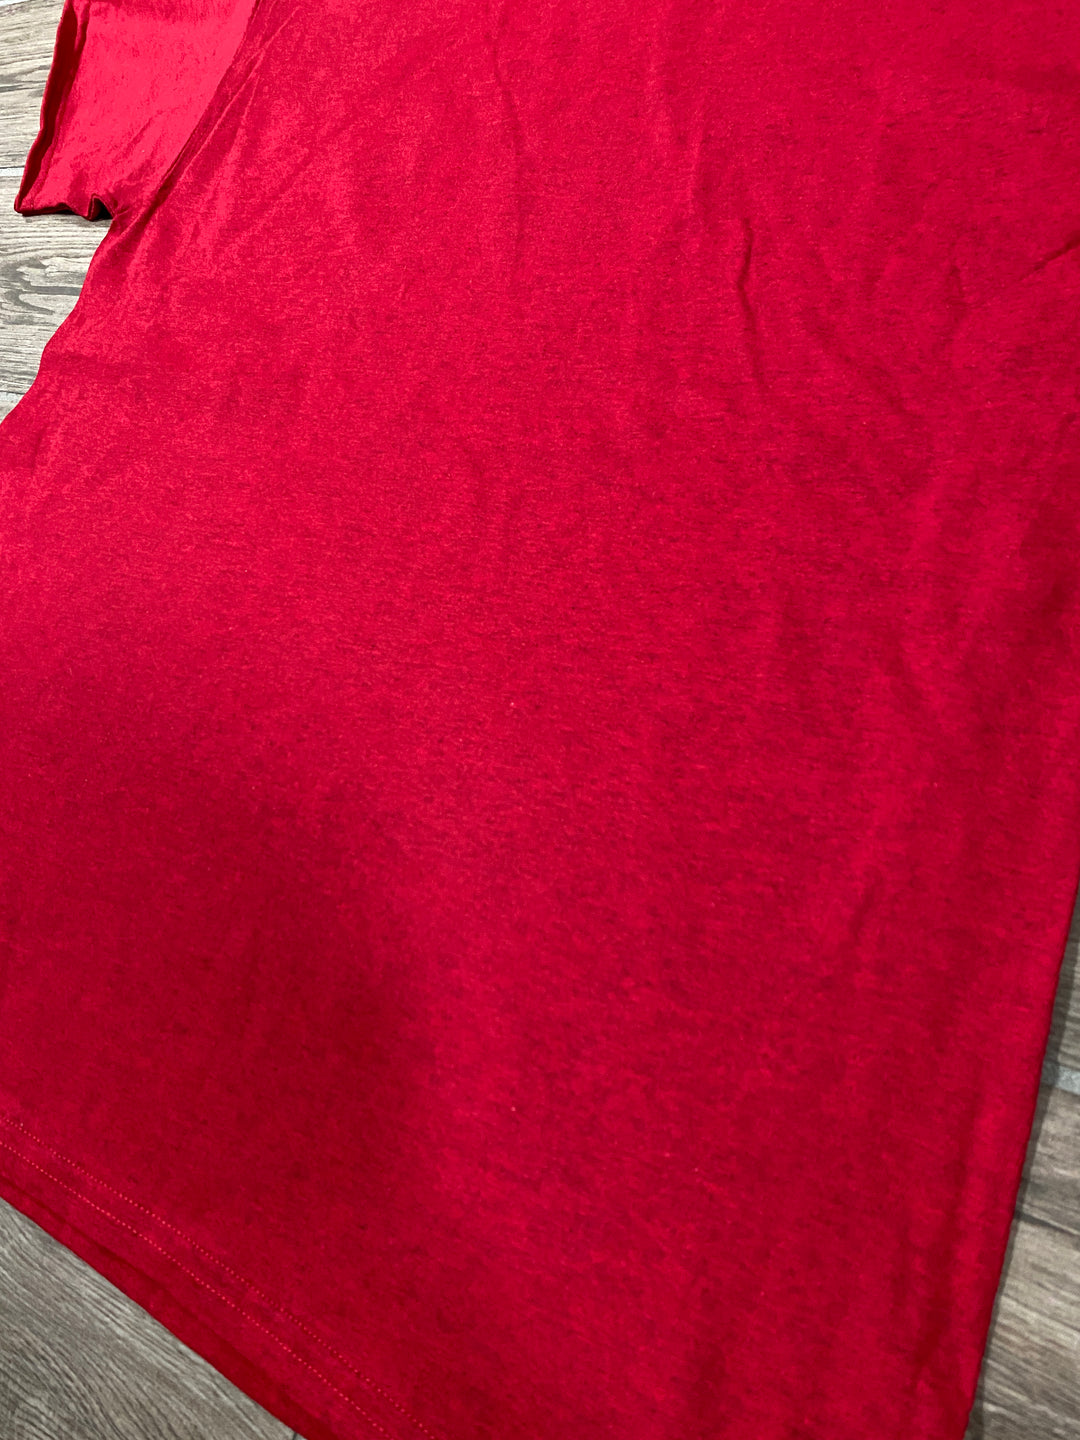 Antique Cherry Red Gildan Shirt - DTG Sample